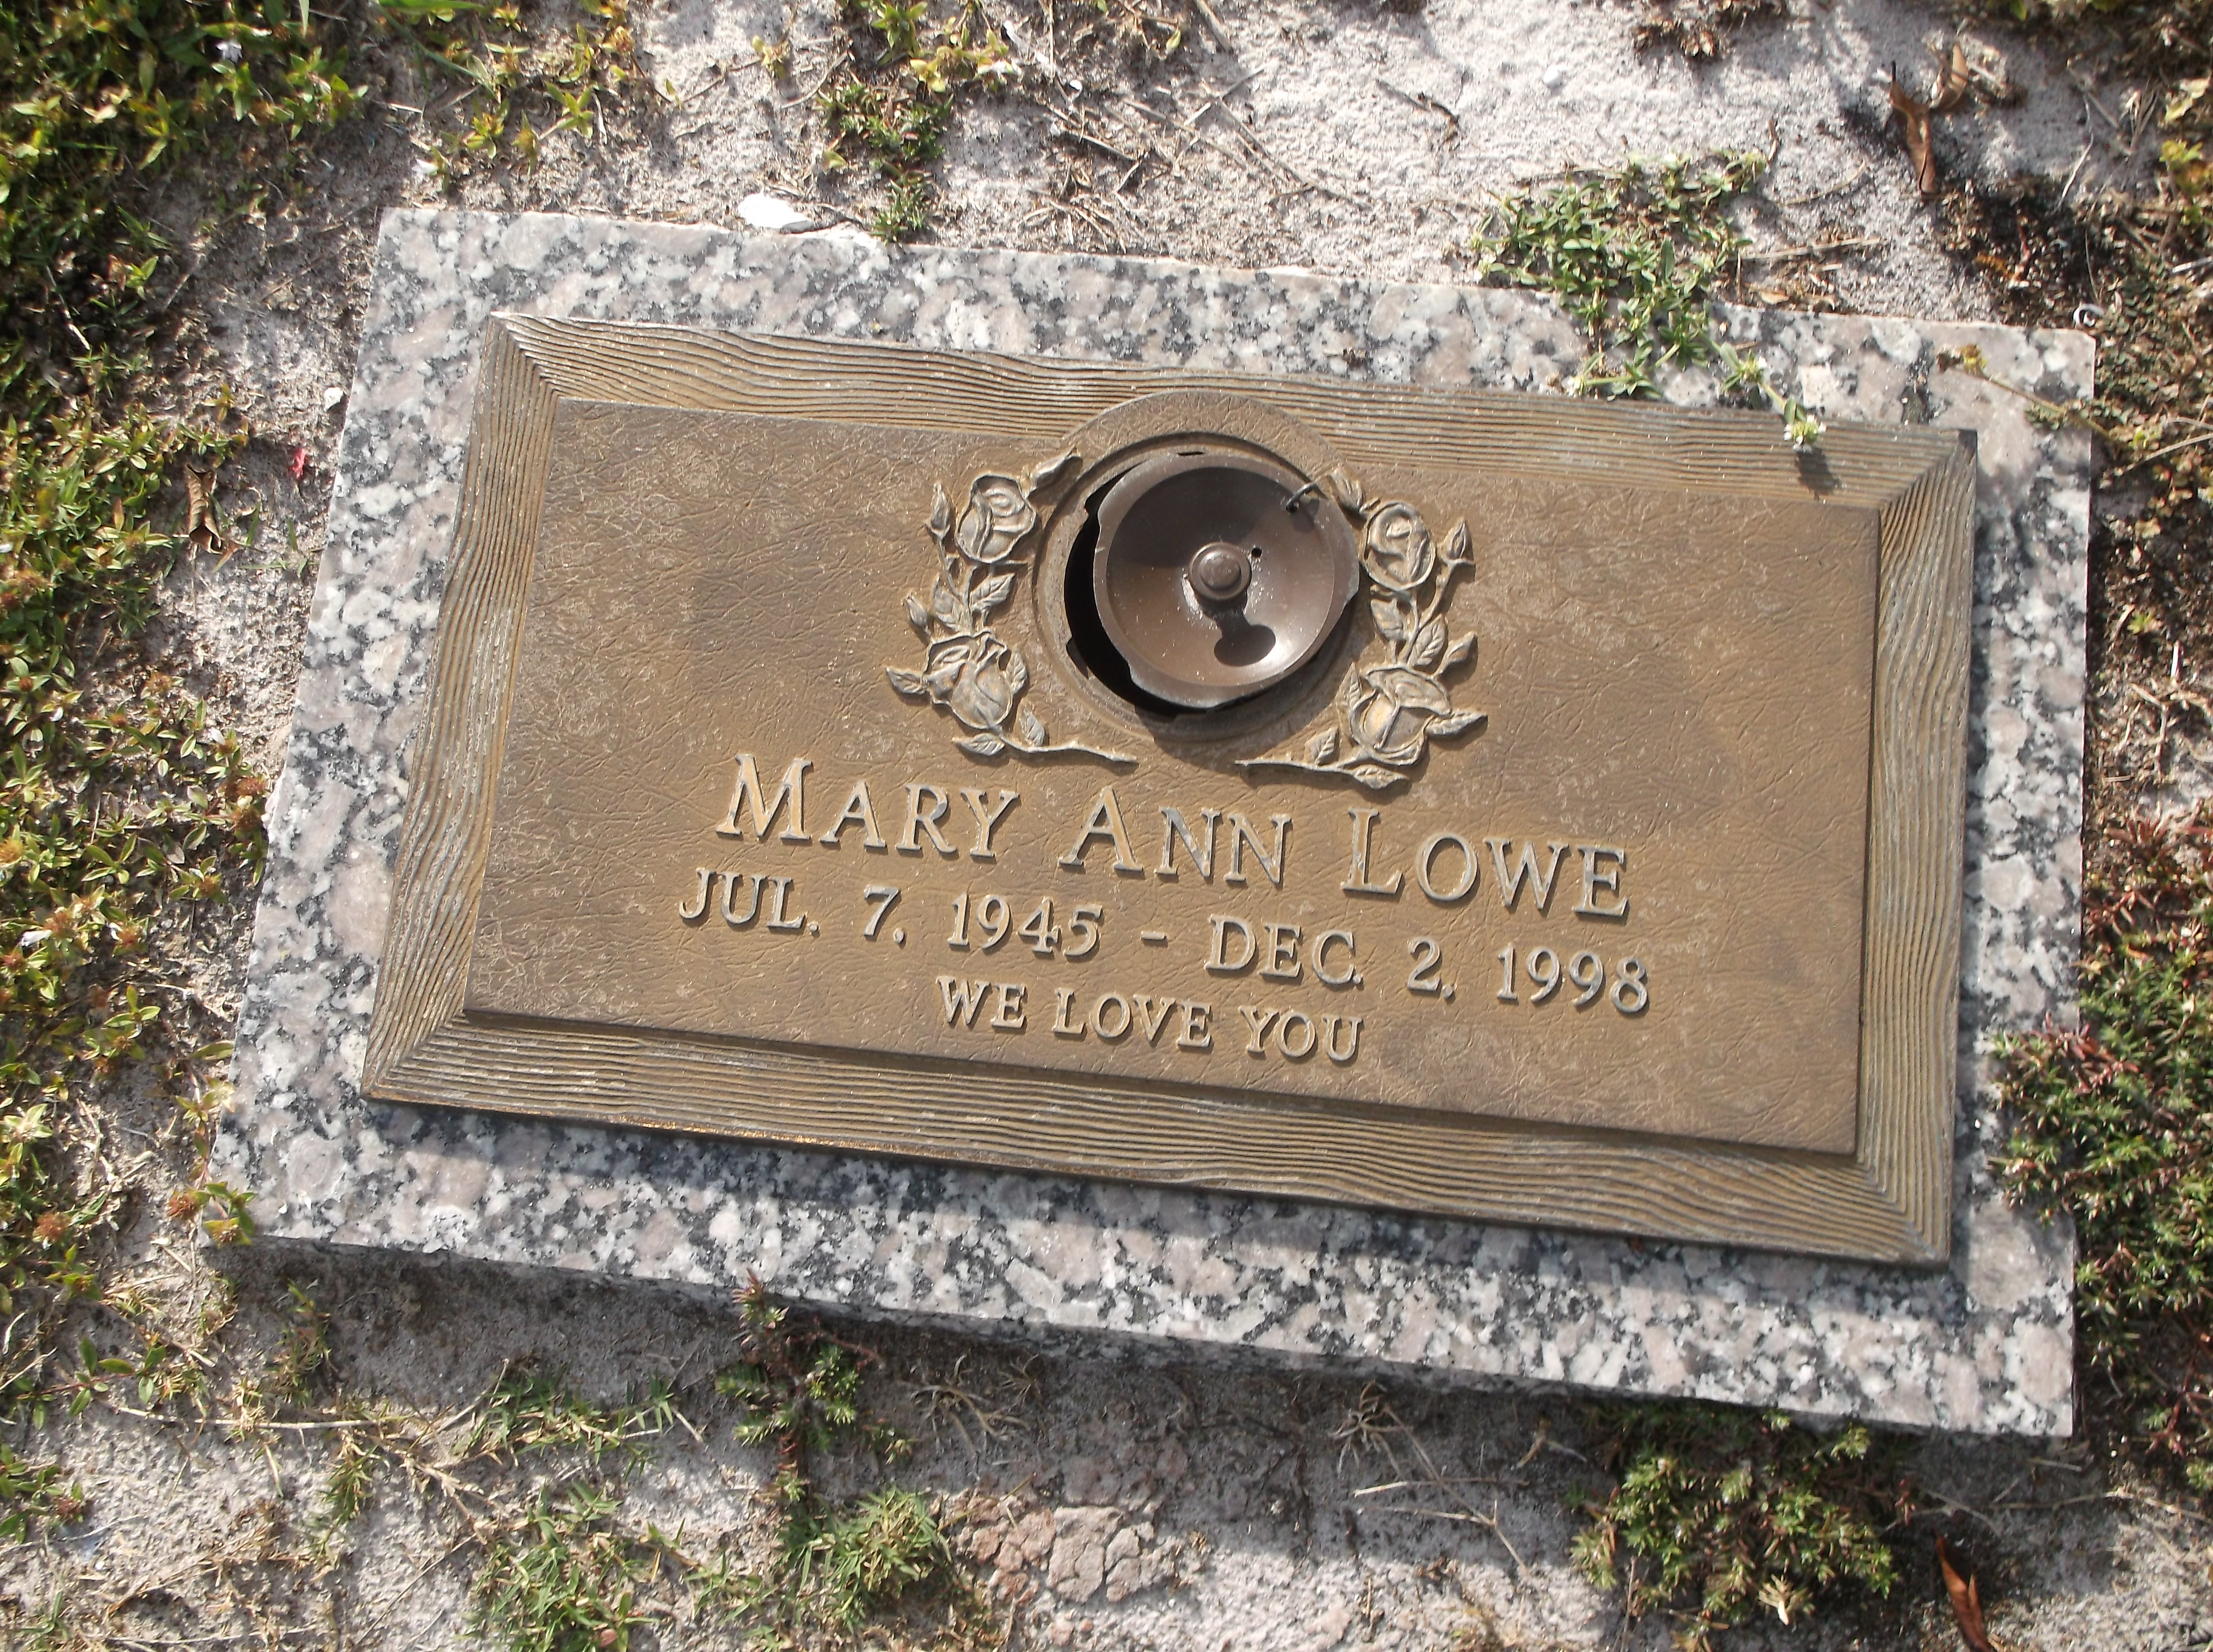 Mary Ann Lowe